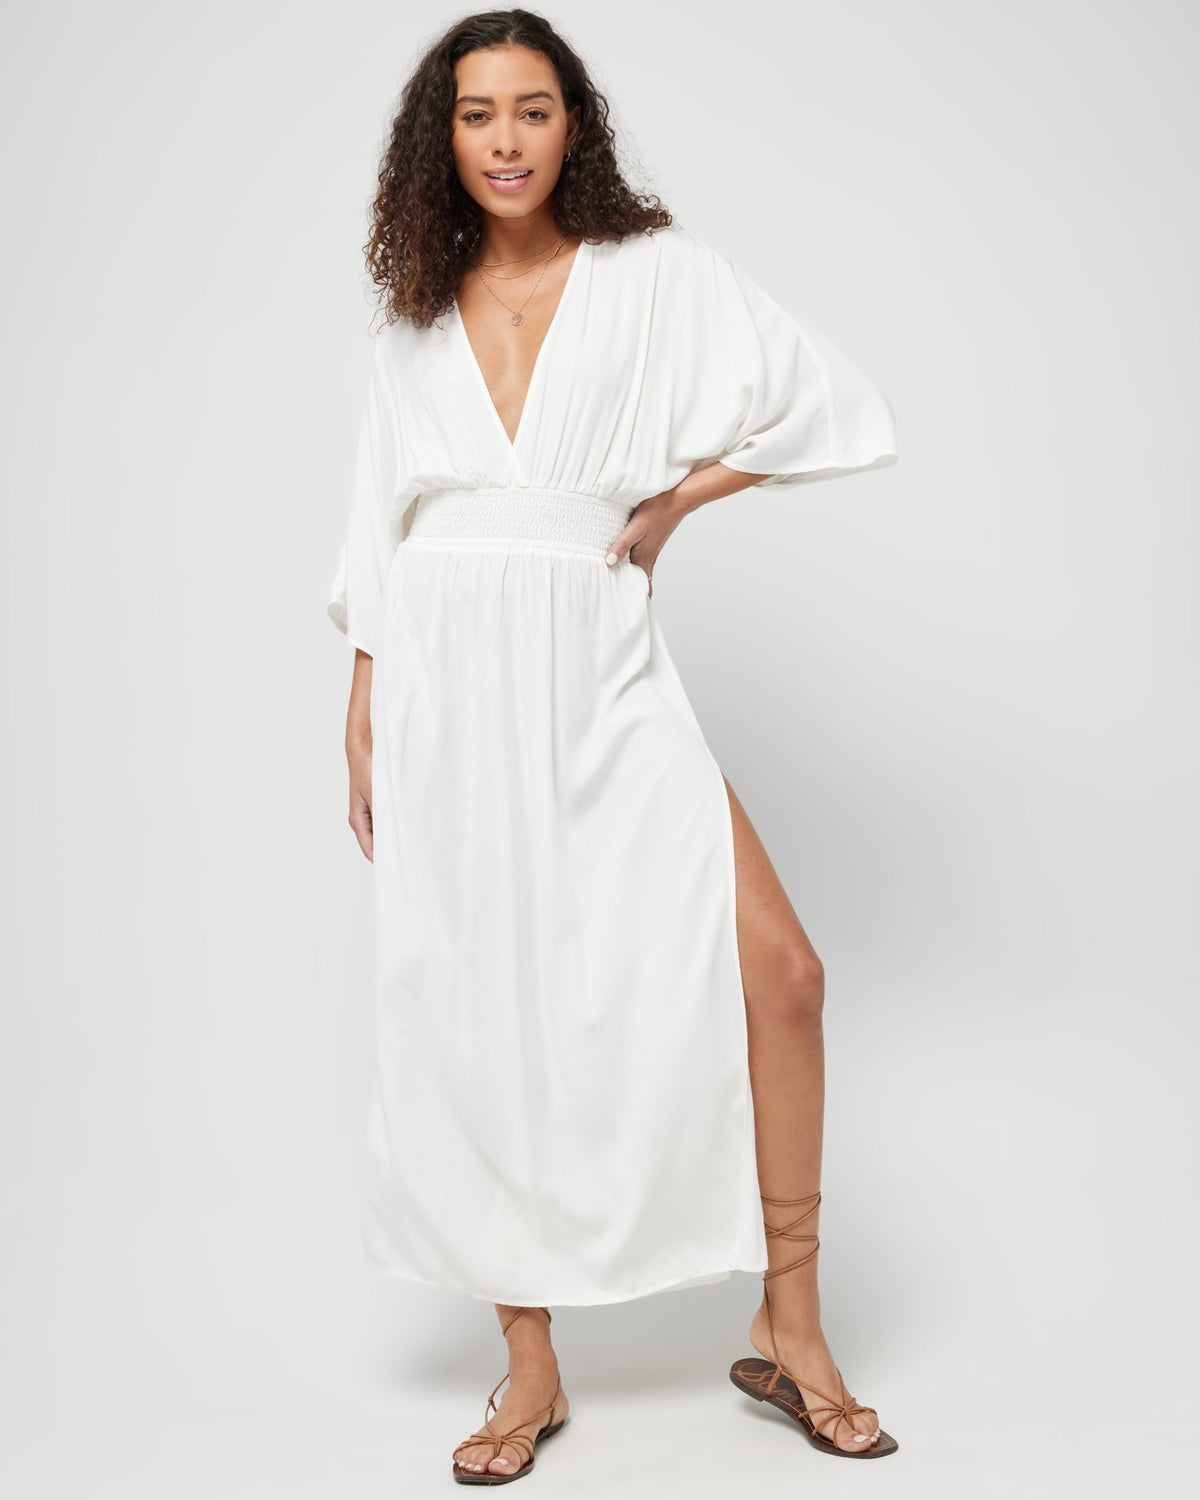 Sungazer Dress Cream | Model: Blaine (size: S)